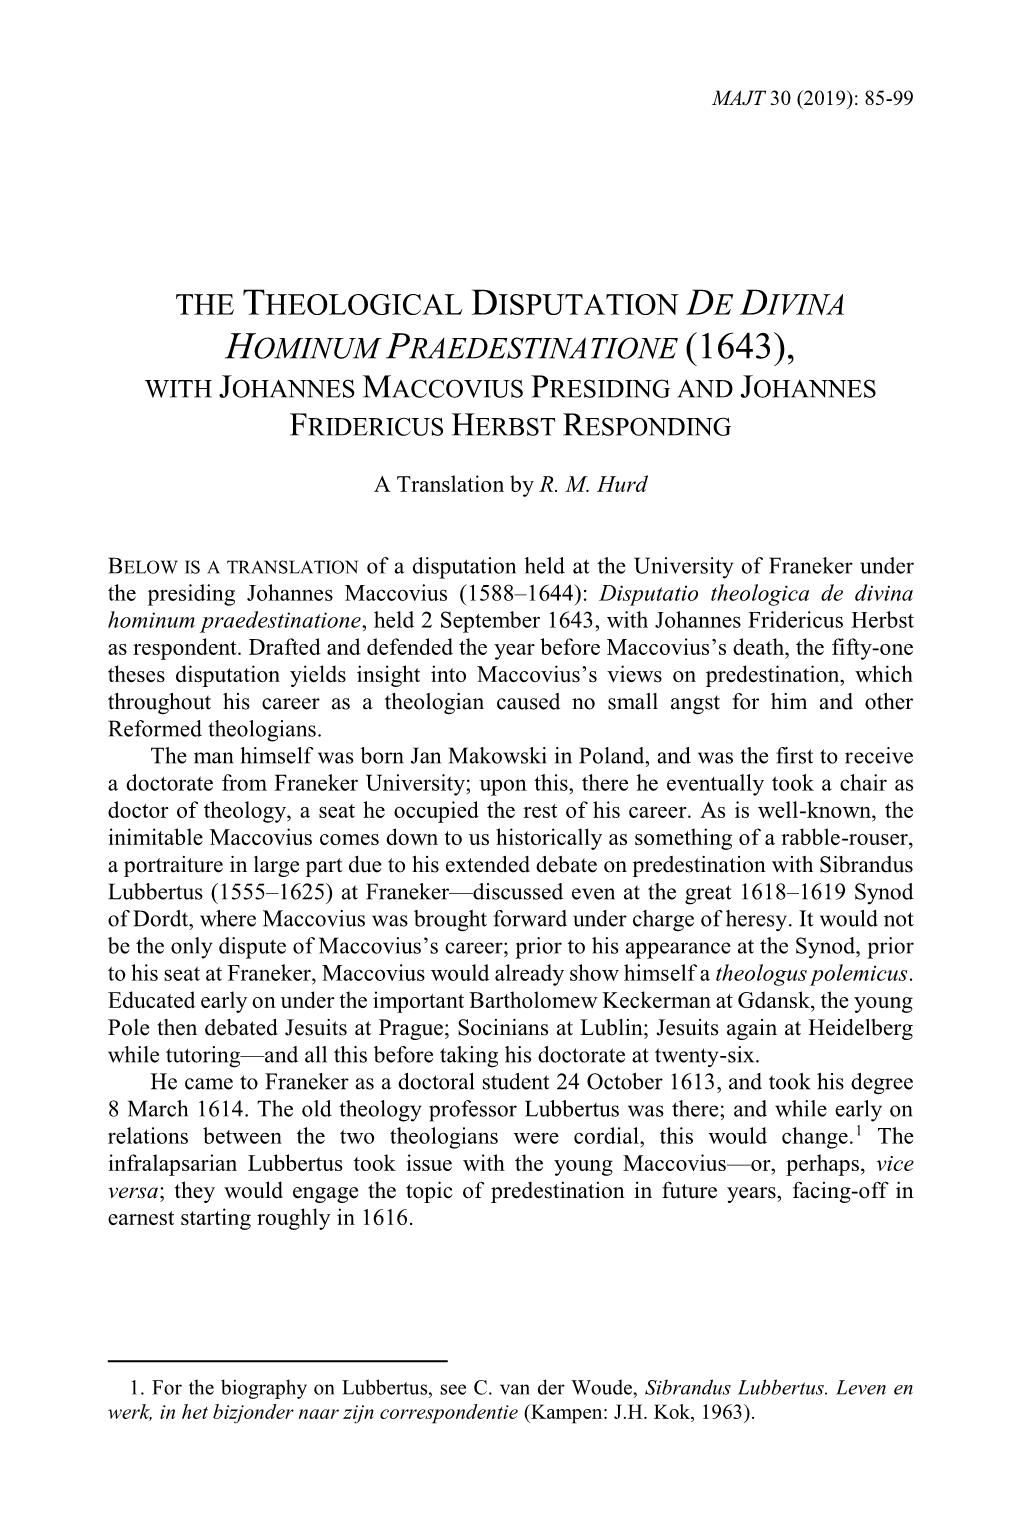 The Theological Disputation De Divina Hominum Praedestinatione (1643), with Johannes Maccovius Presiding and Johannes Fridericus Herbst Responding